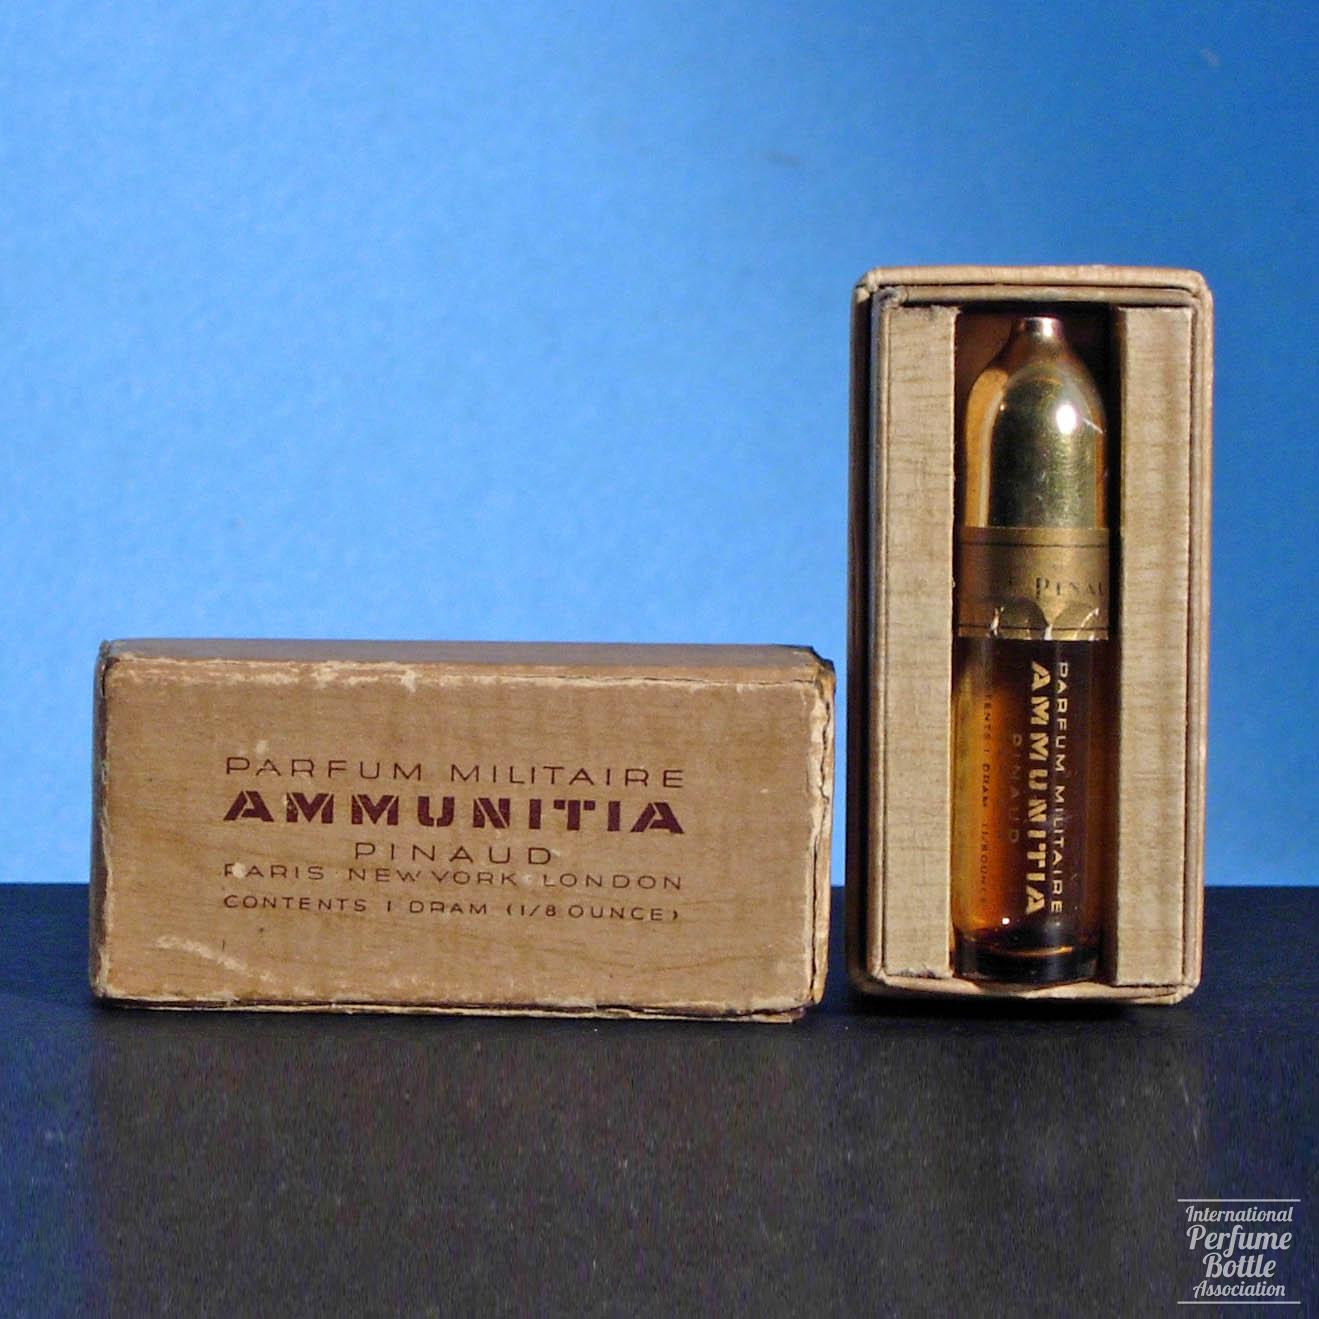 "Ammunitia" by Pinaud